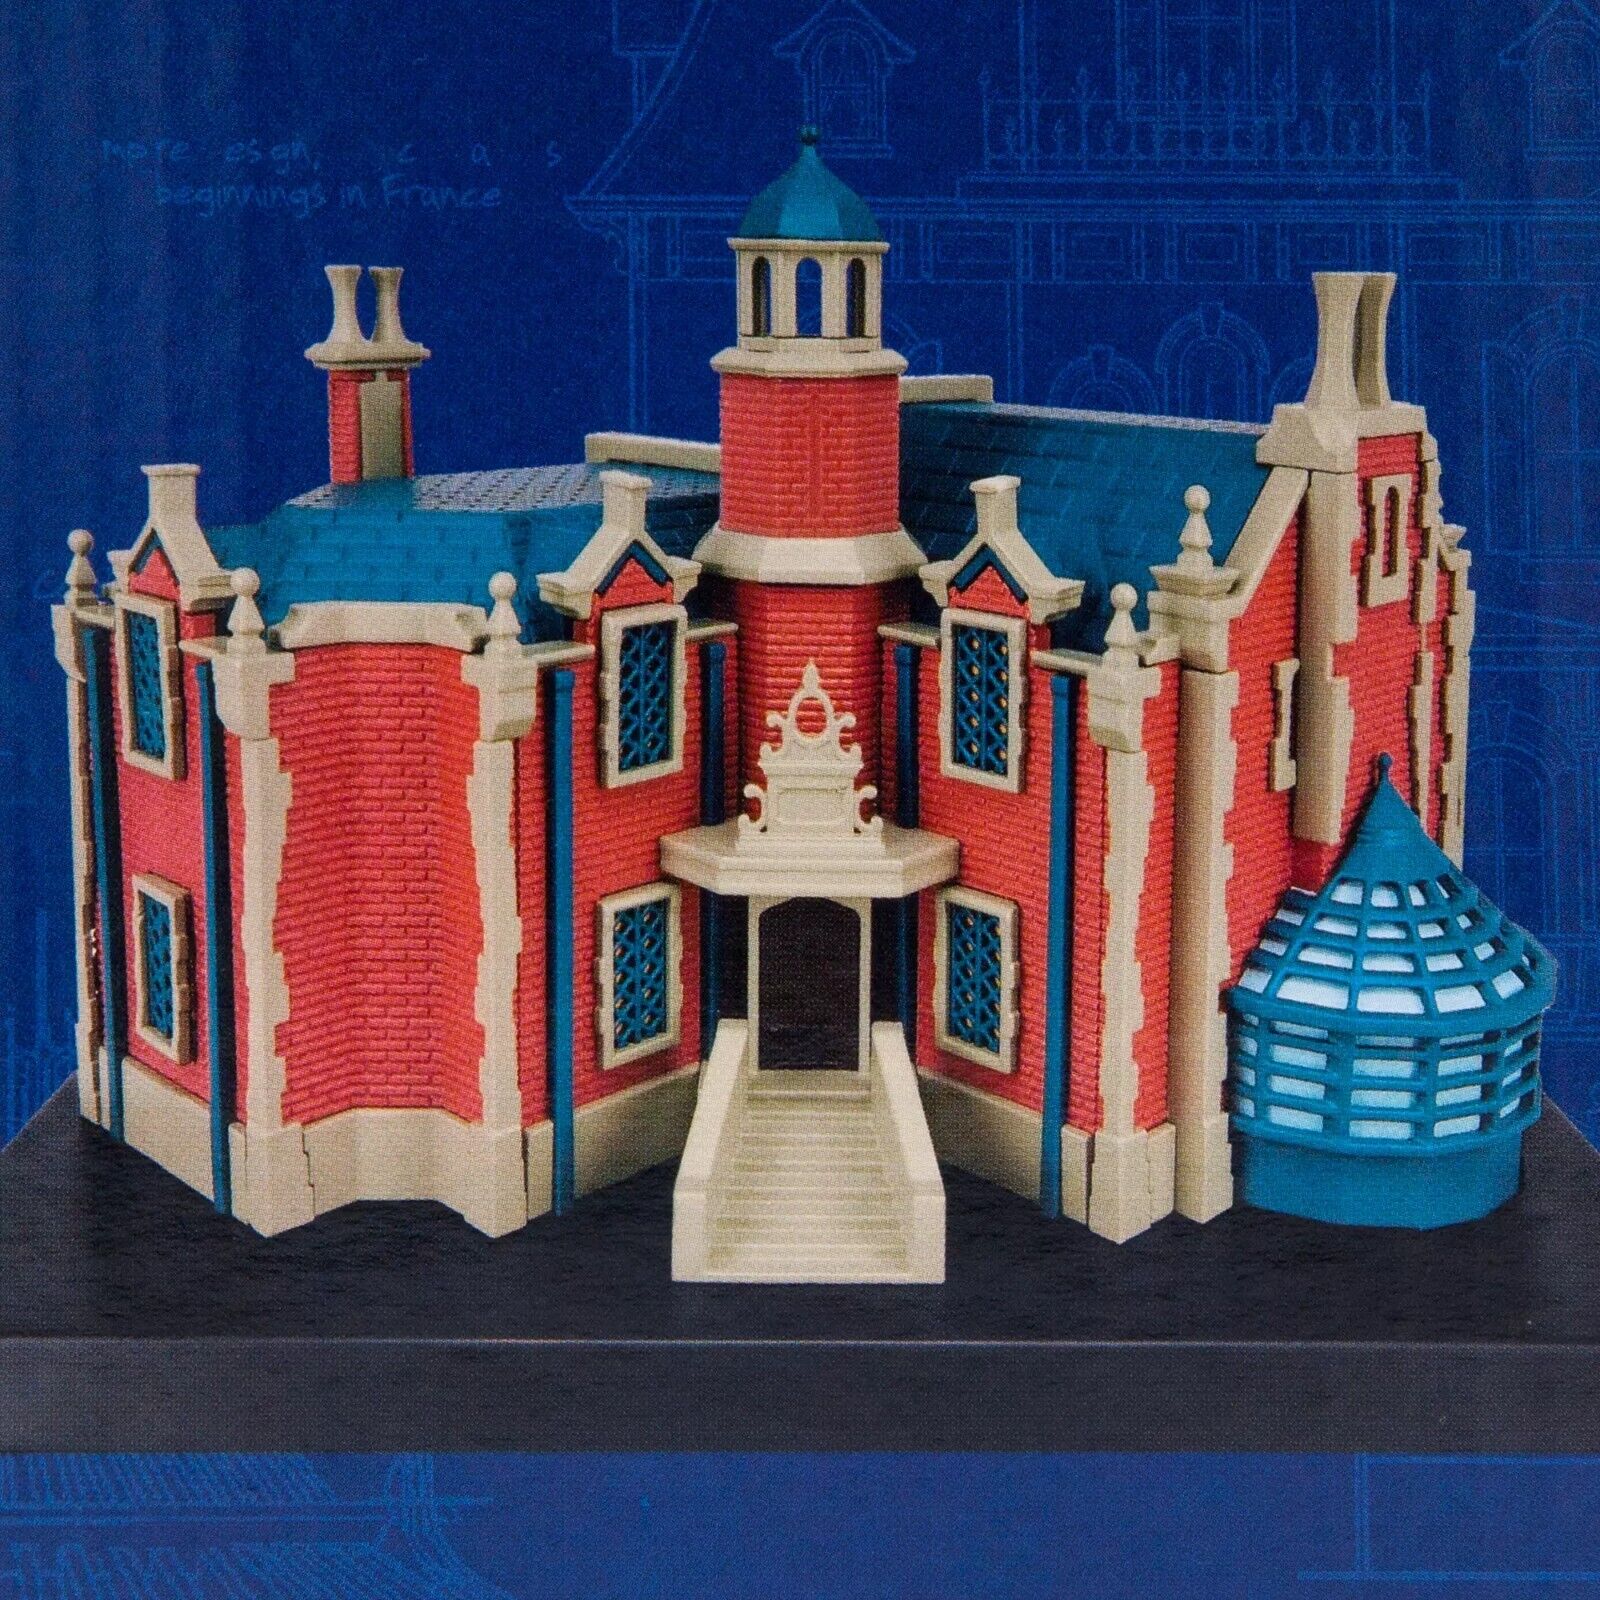 The Haunted Mansion Model Kit – Walt Disney World - 140 pc Model and Display